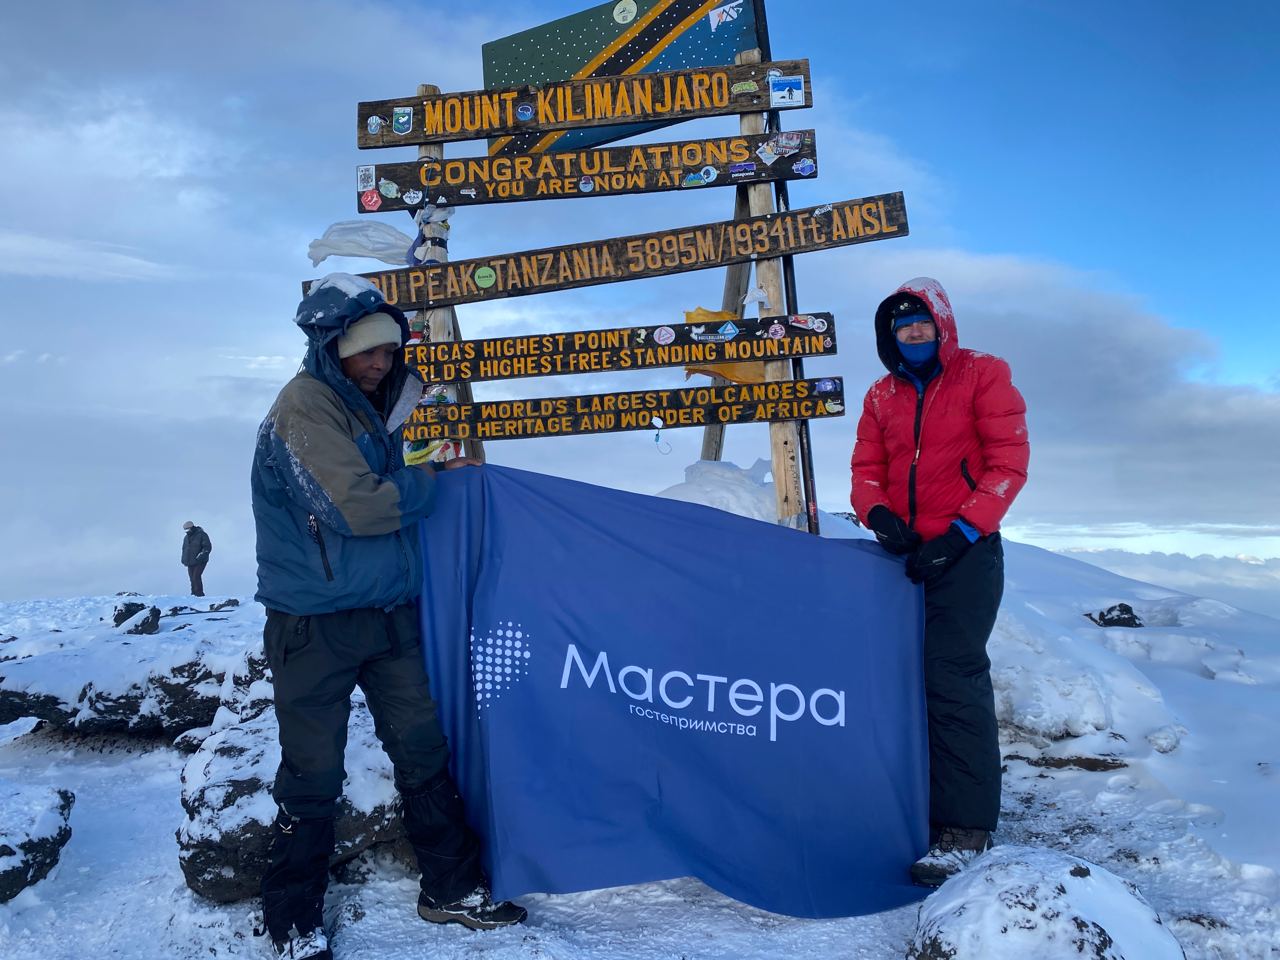 Мастер гостеприимства покорил Килиманджаро с флагом главного туристического конкурса страны - фото 1